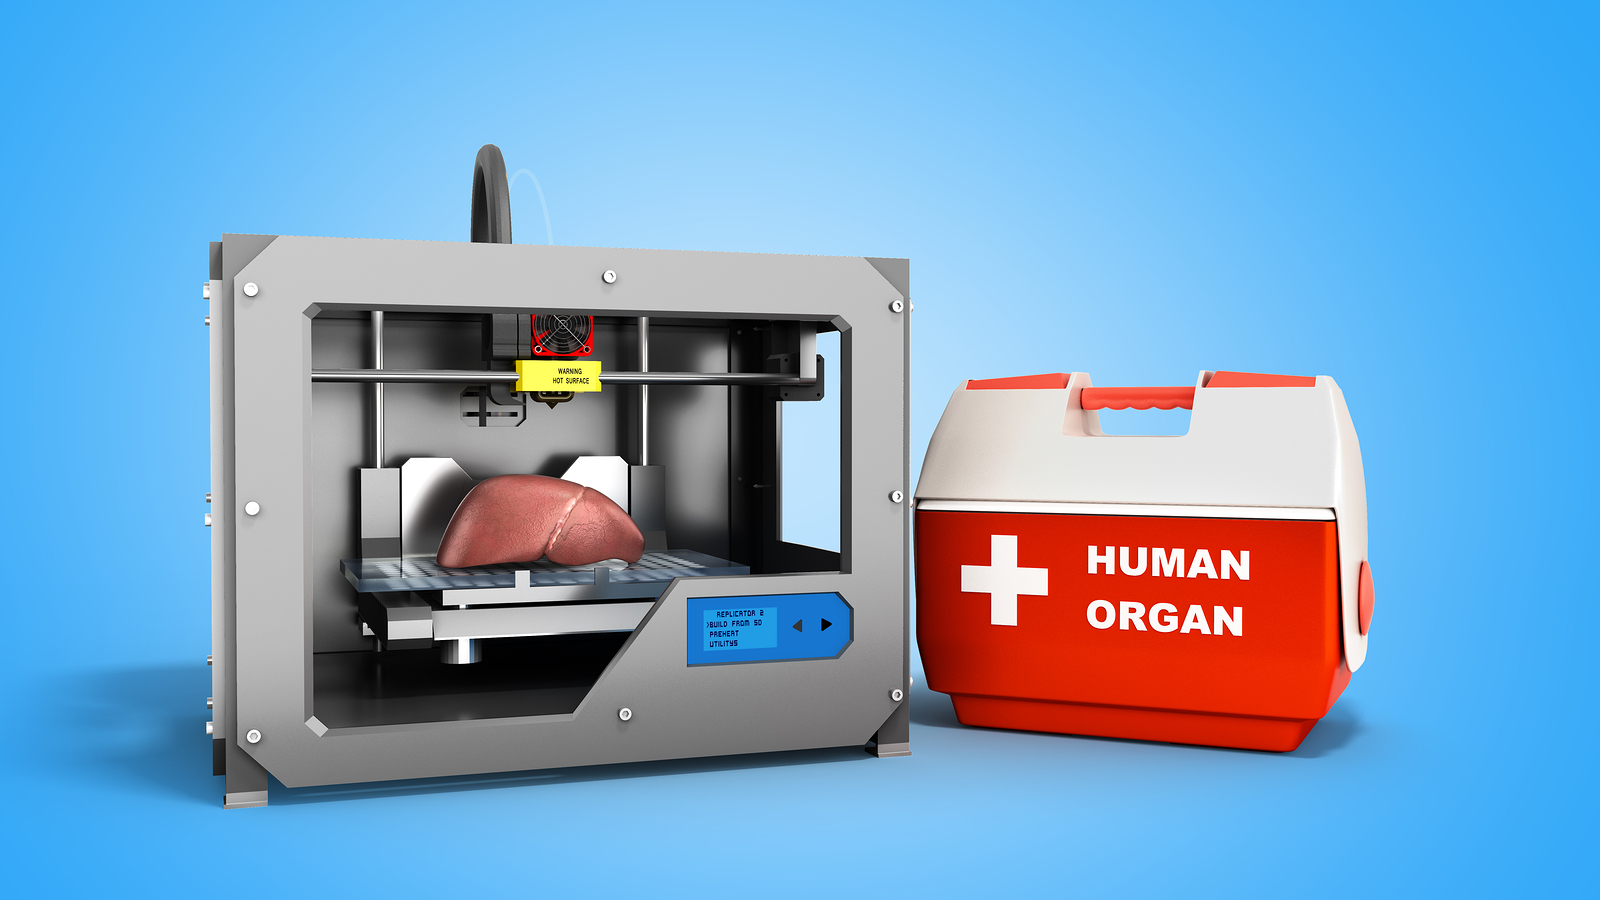 Scientists at Carnegie Mellon publish 3D Bioprinter design under CC license